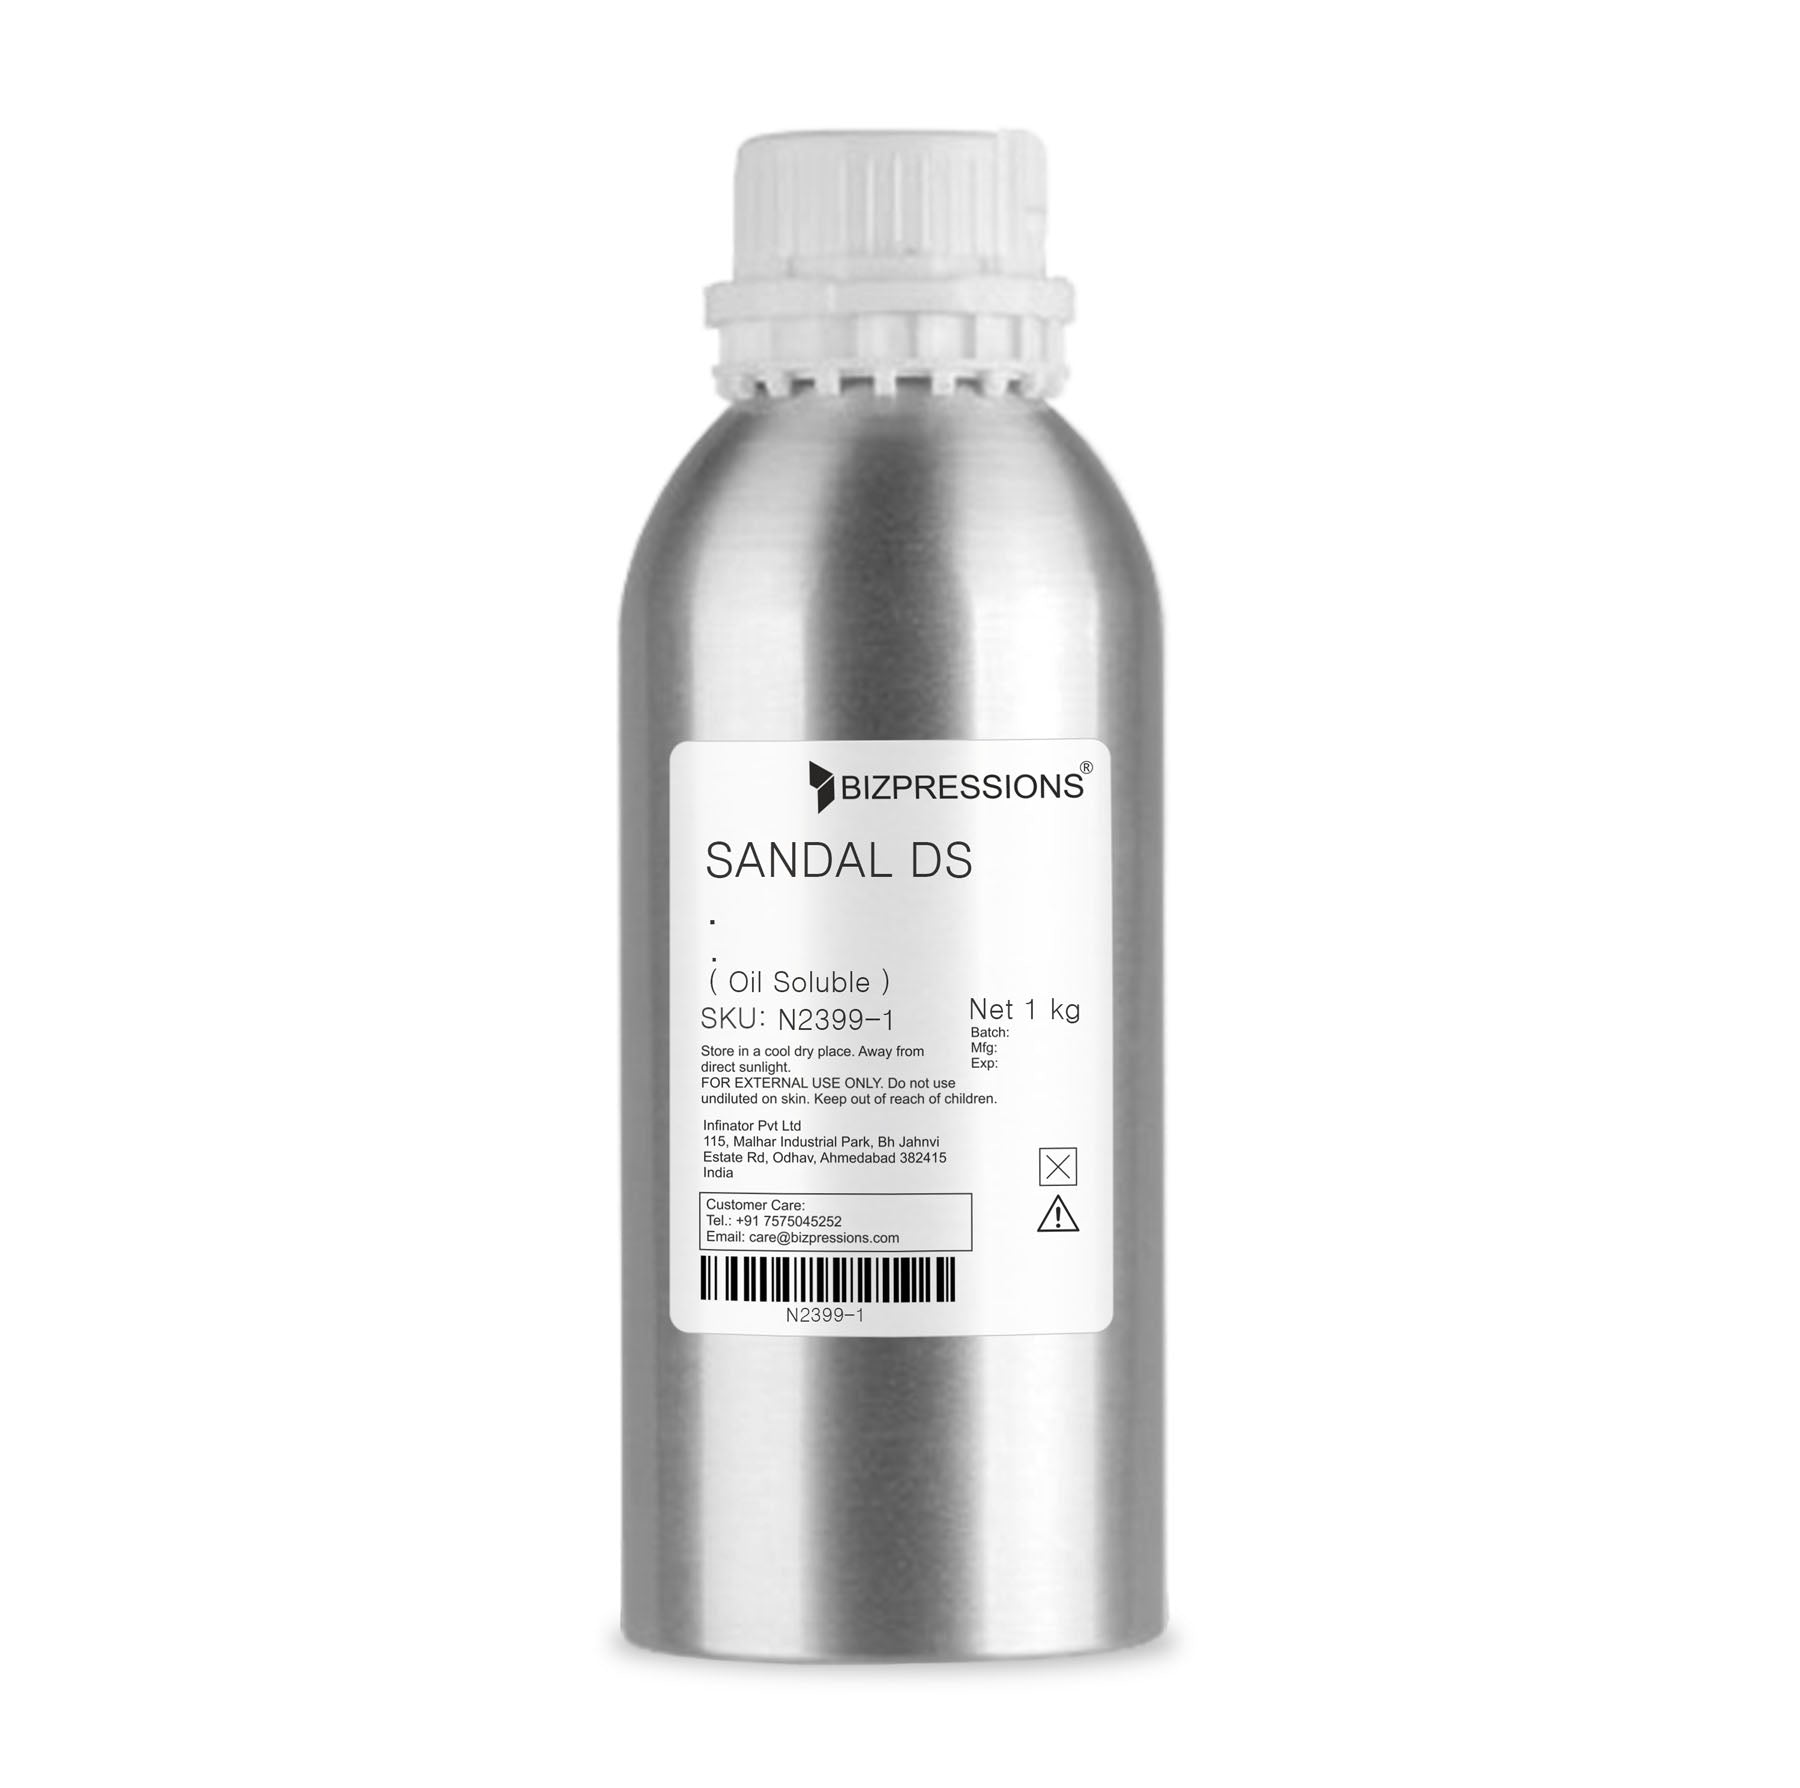 SANDAL DS - Fragrance ( Oil Soluble ) - 1 kg